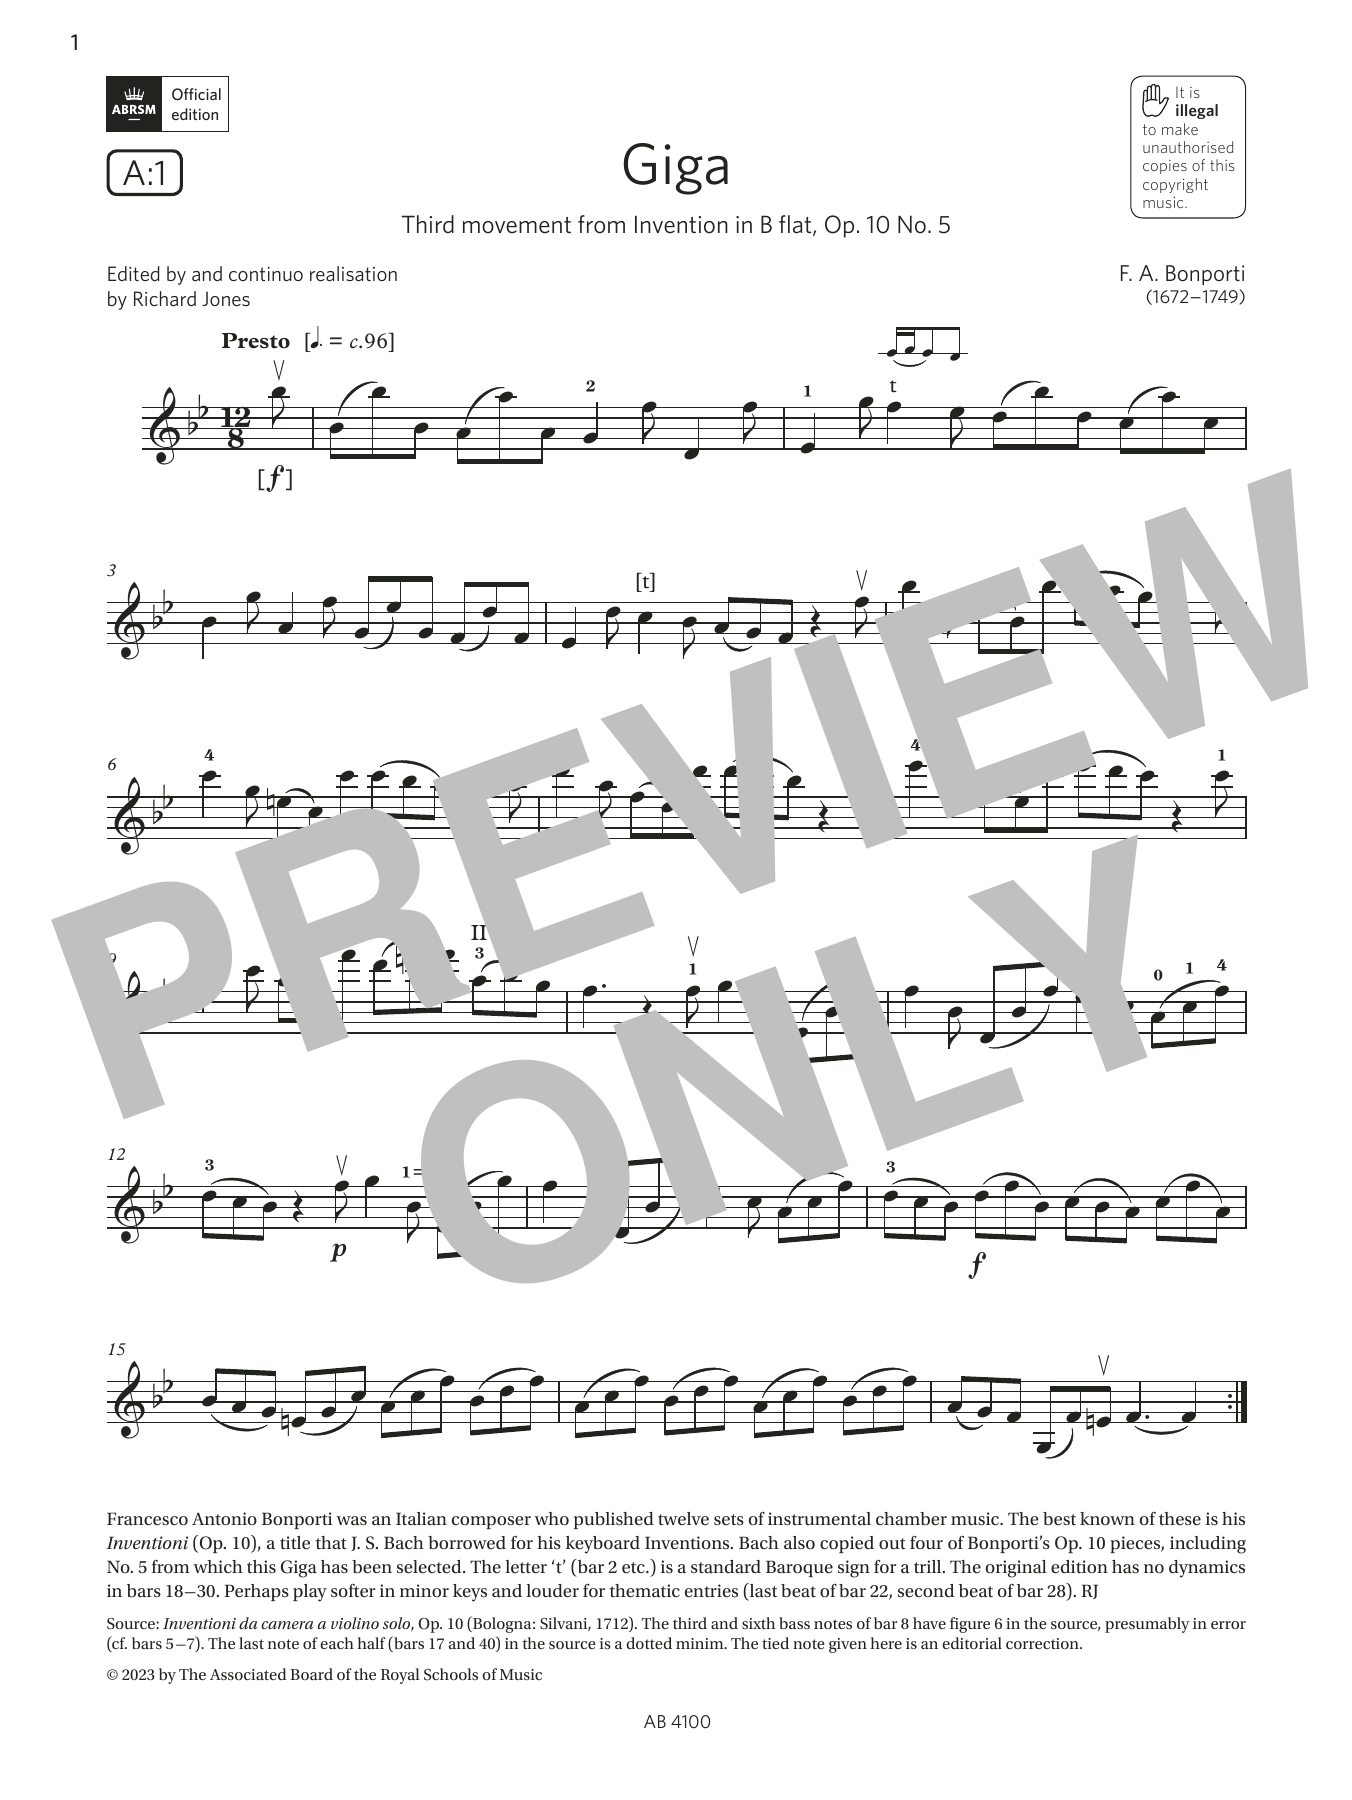 Download F. A. Bonporti Giga (Grade 6, A1, from the ABRSM Violi Sheet Music